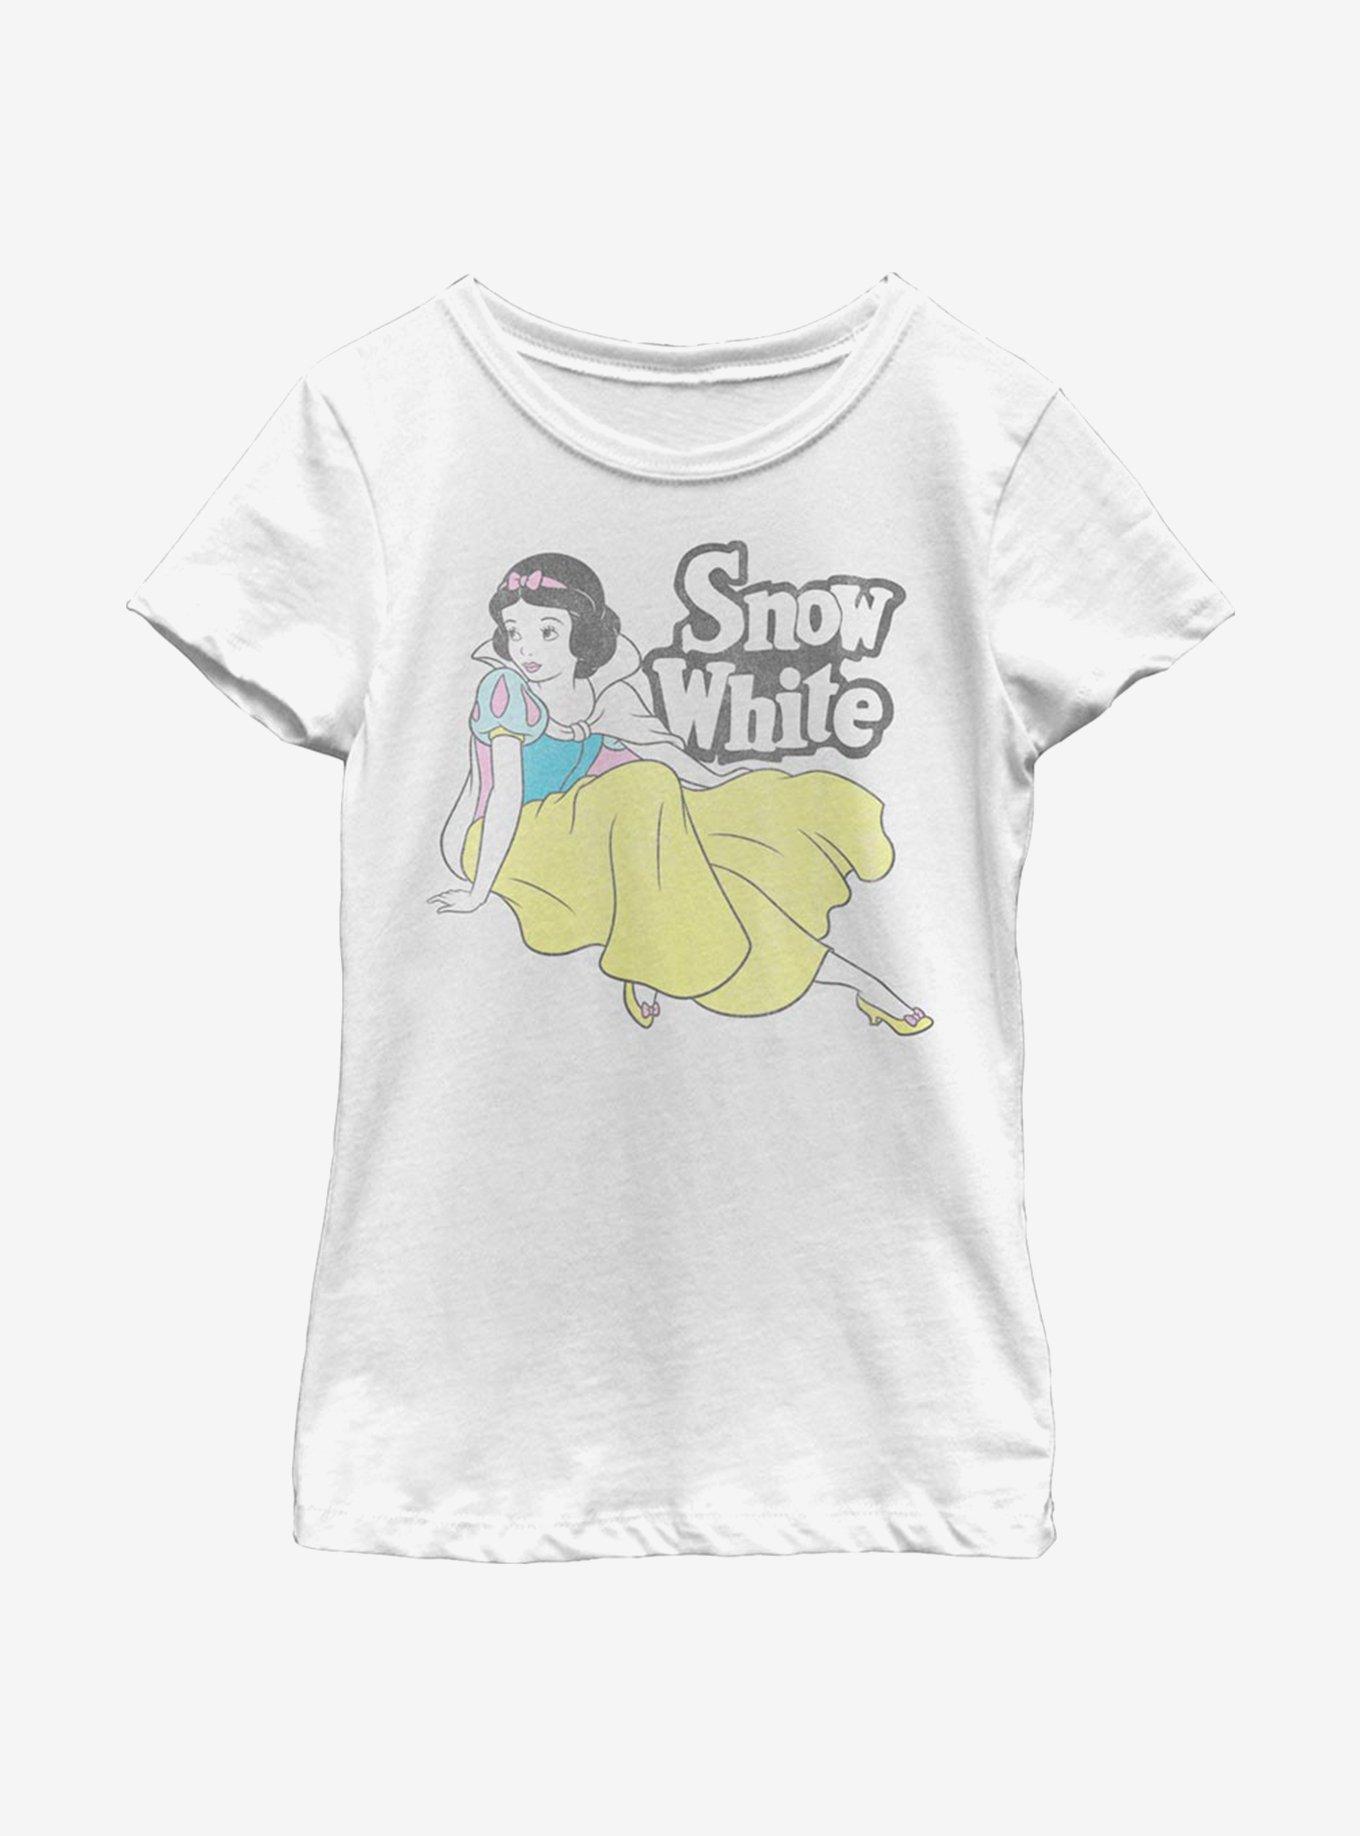 Disney Snow White And The Seven Dwarfs Vintage Youth Girls T-Shirt, WHITE, hi-res